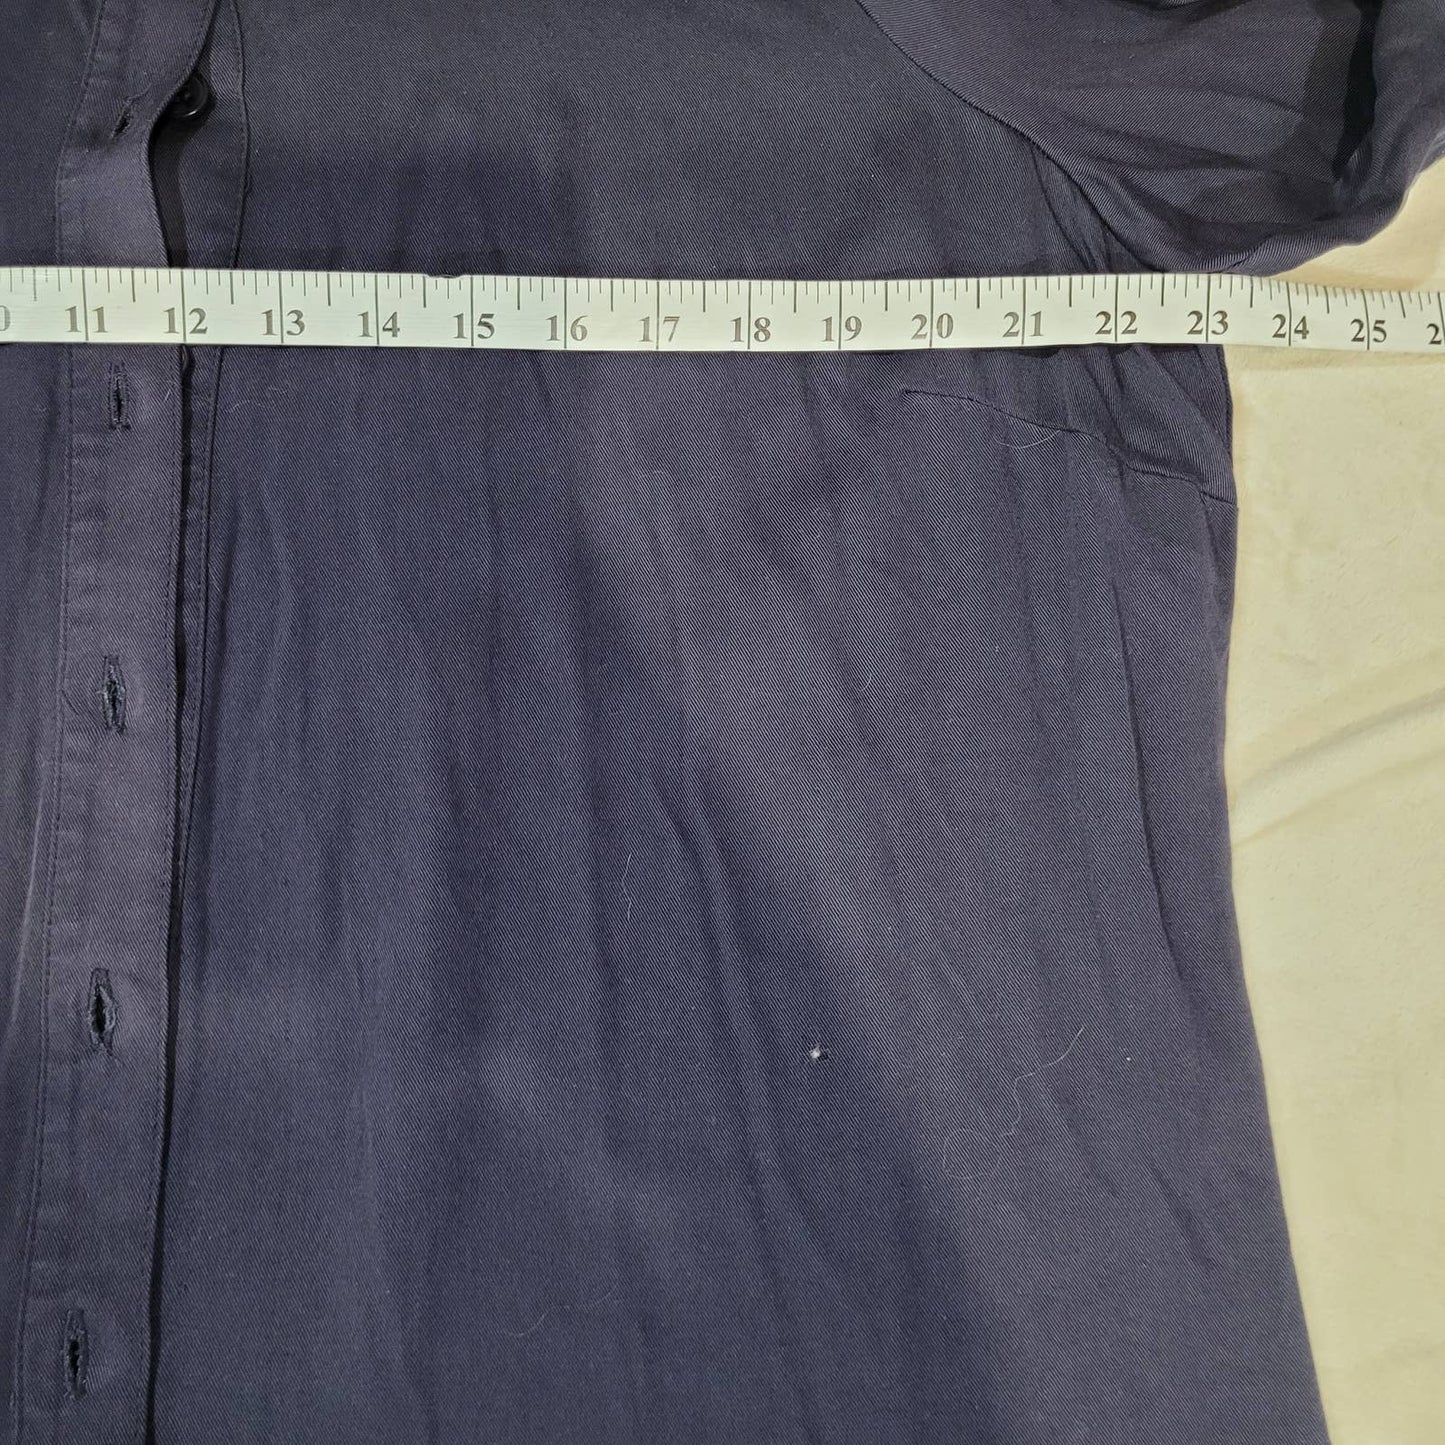 Louben Woman Navy Blue Tencel Button Up 3/4 Sleeve Tunic - Size 16